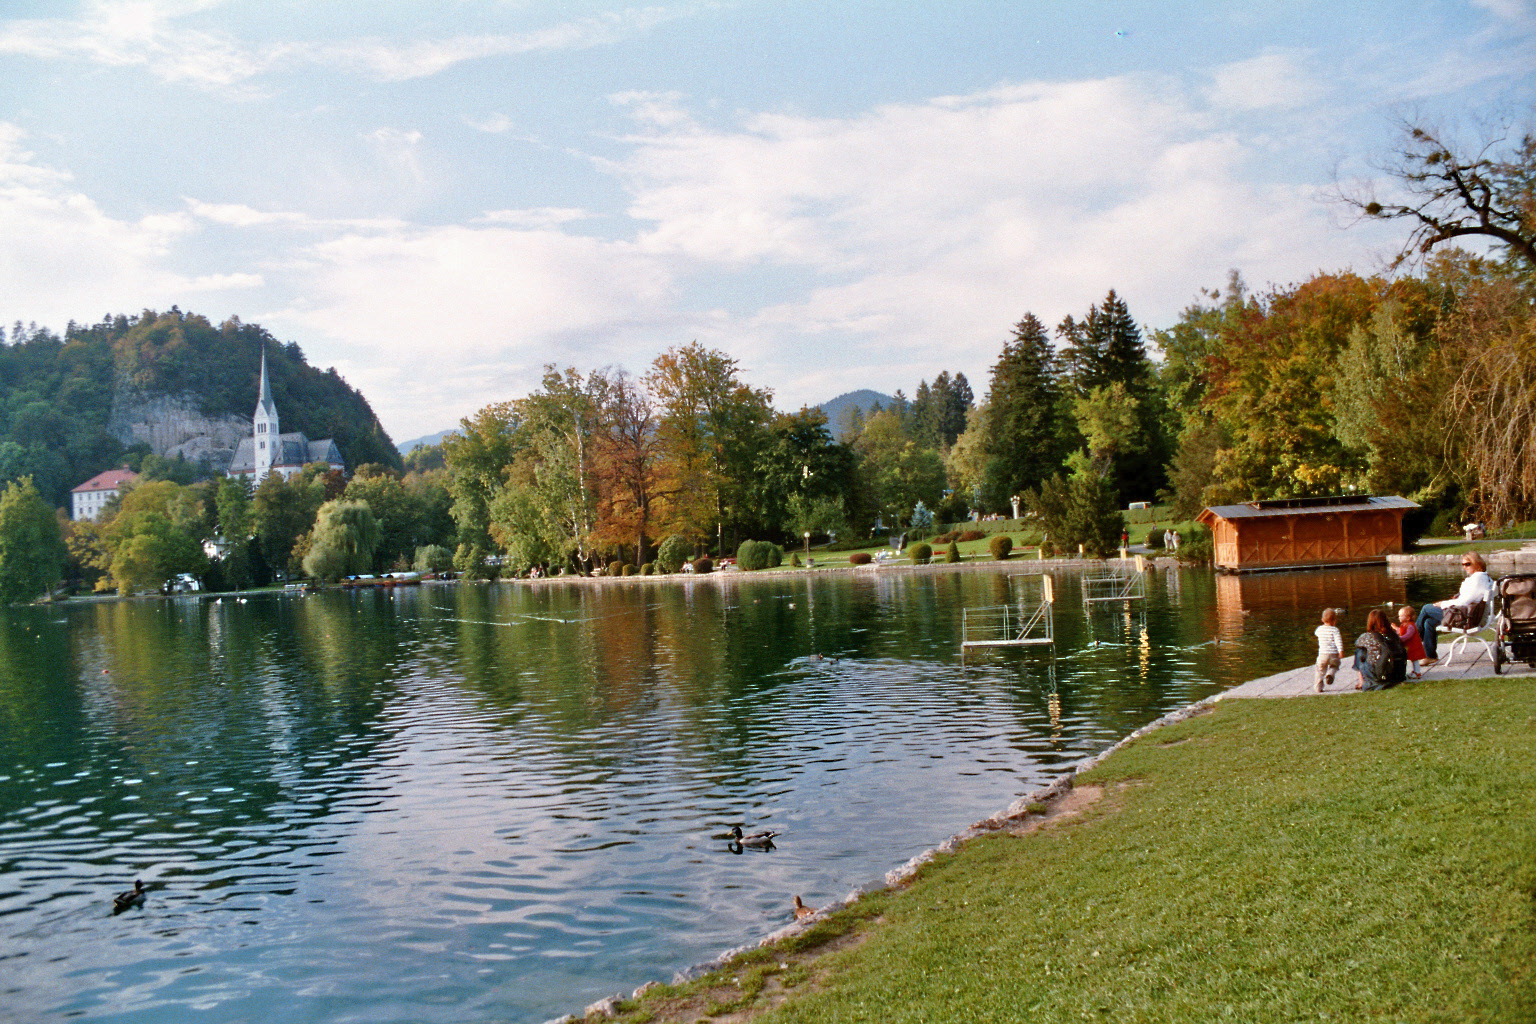 Lake Bled: the promenade